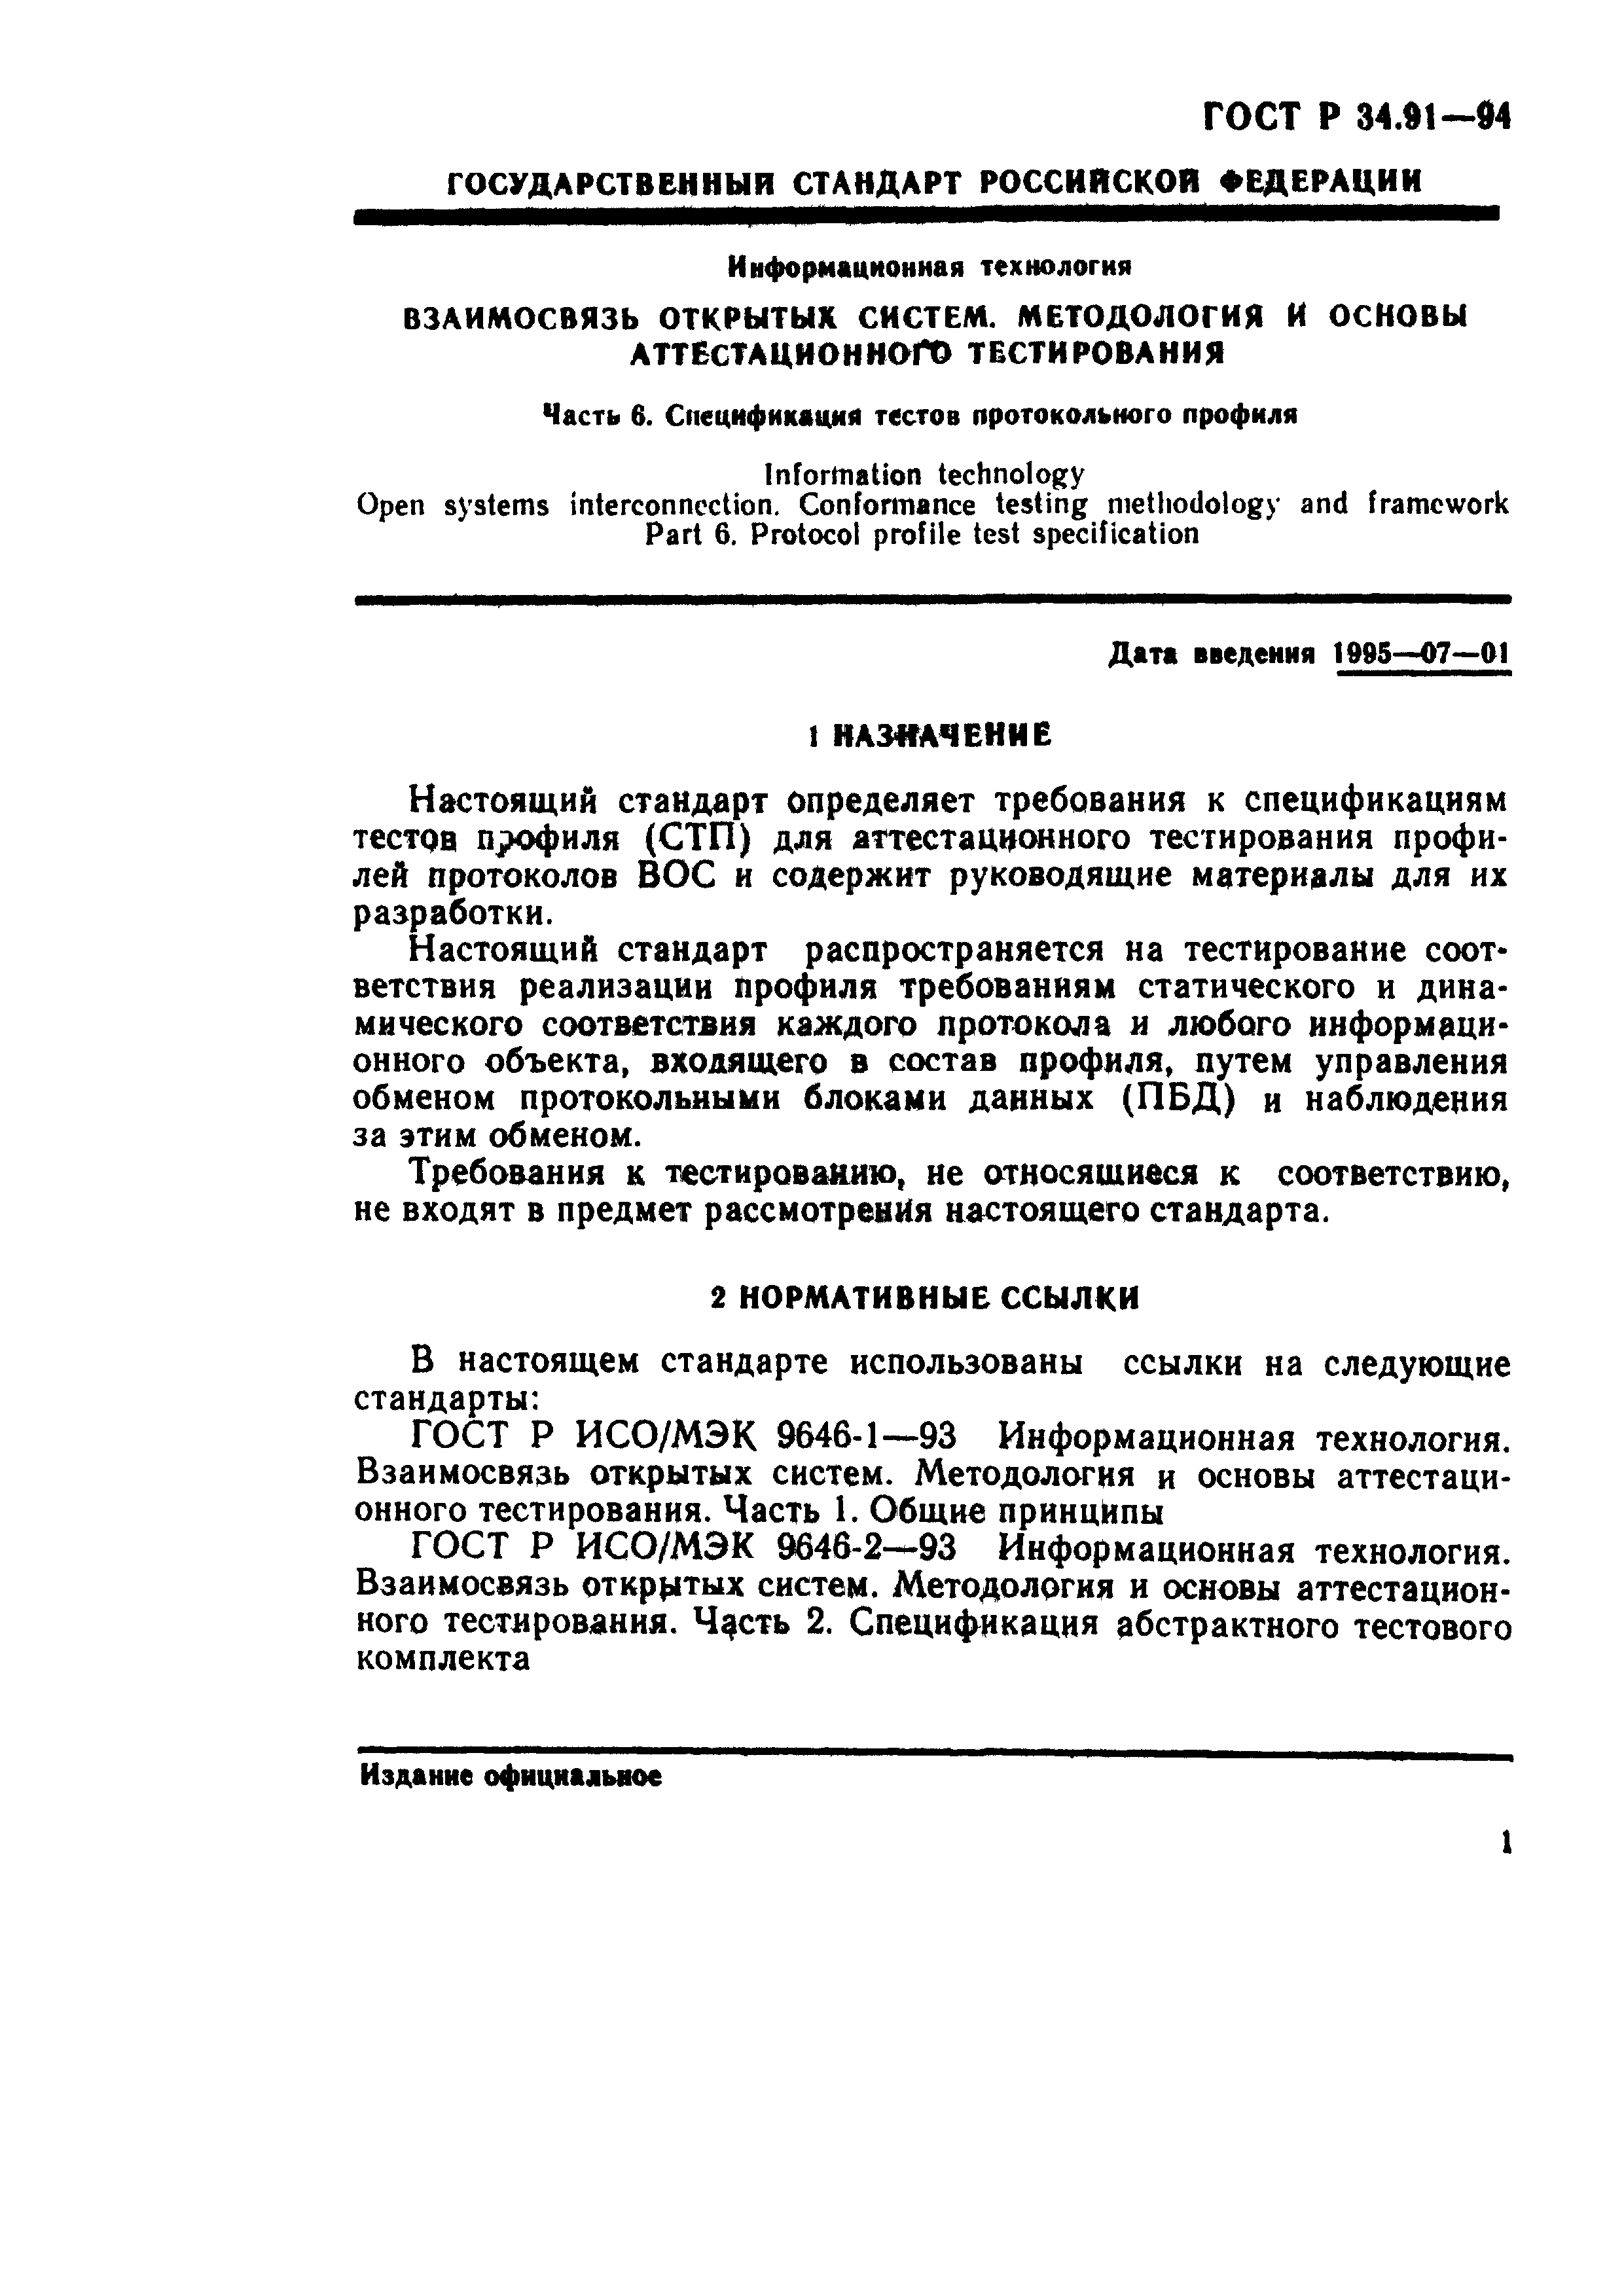 ГОСТ Р 34.91-94